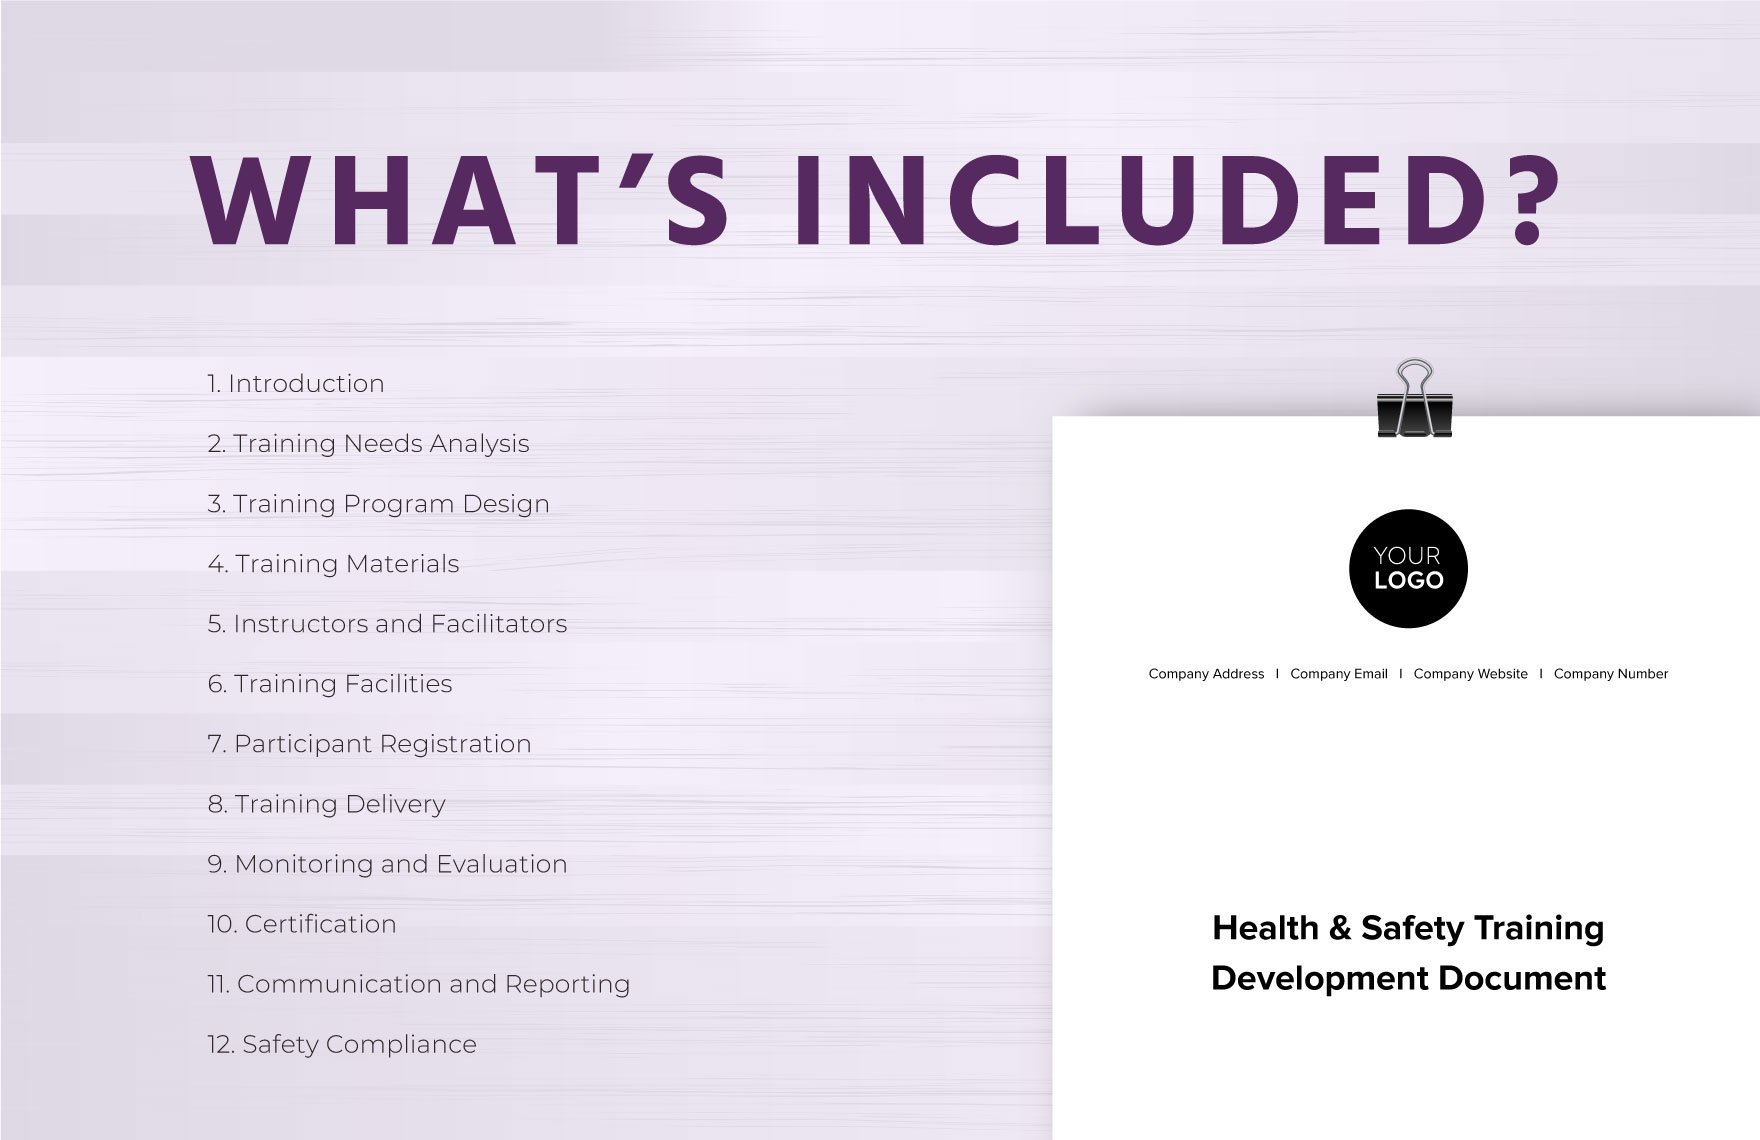 Health & Safety Training Development Document Template